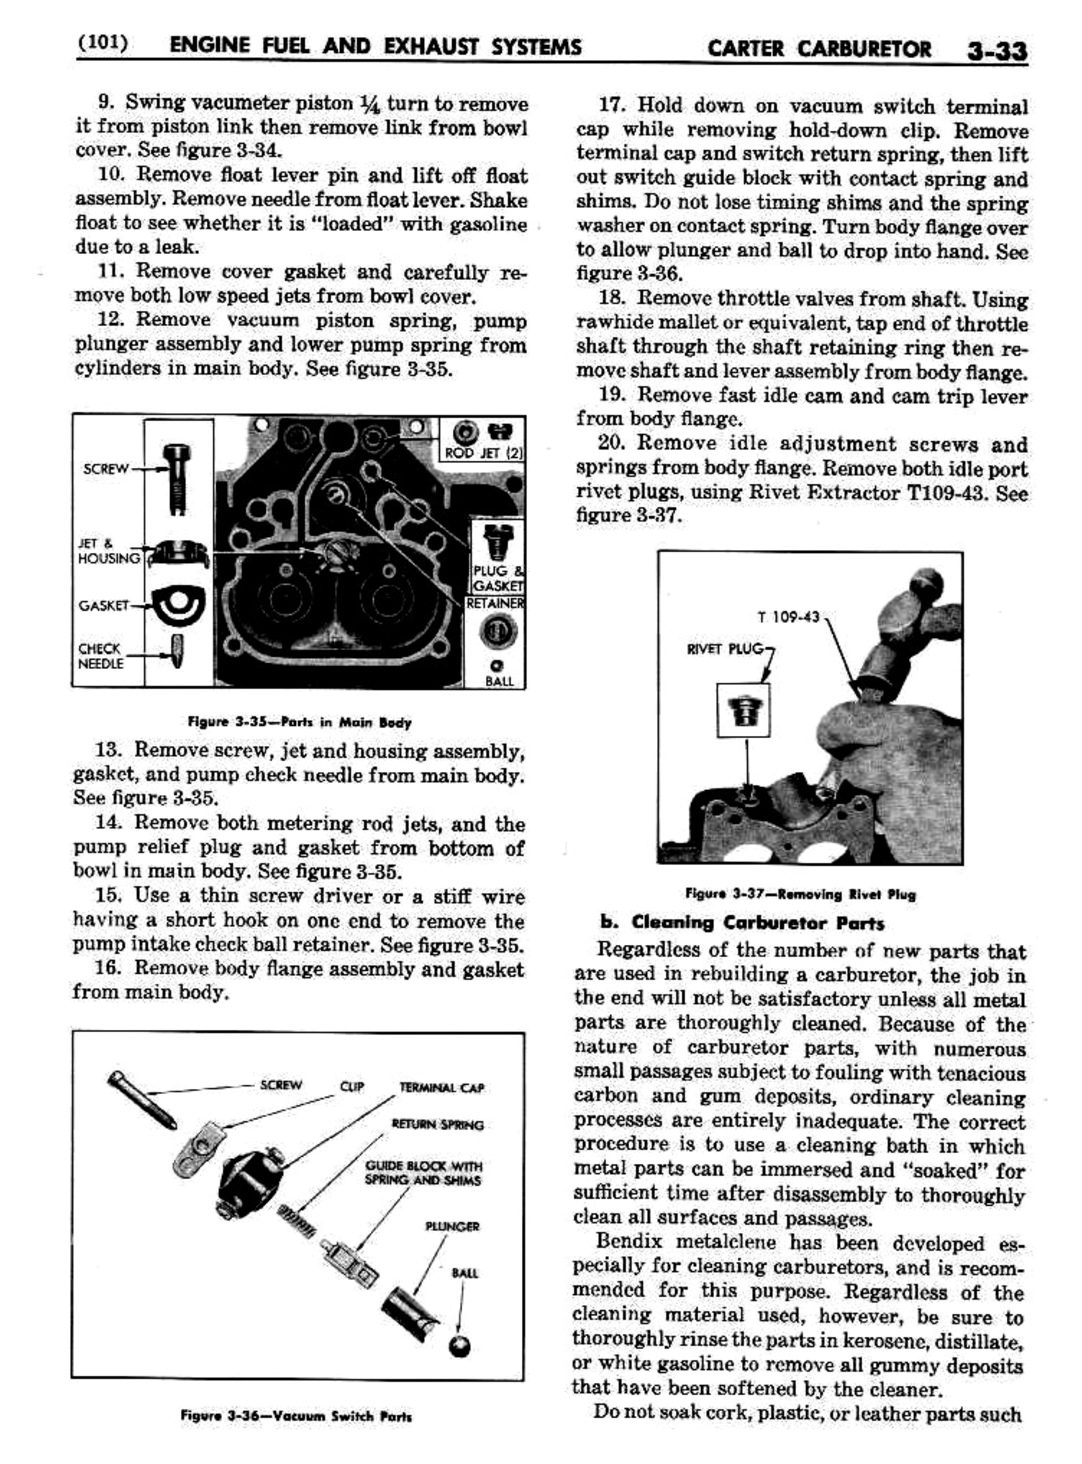 n_04 1951 Buick Shop Manual - Engine Fuel & Exhaust-033-033.jpg